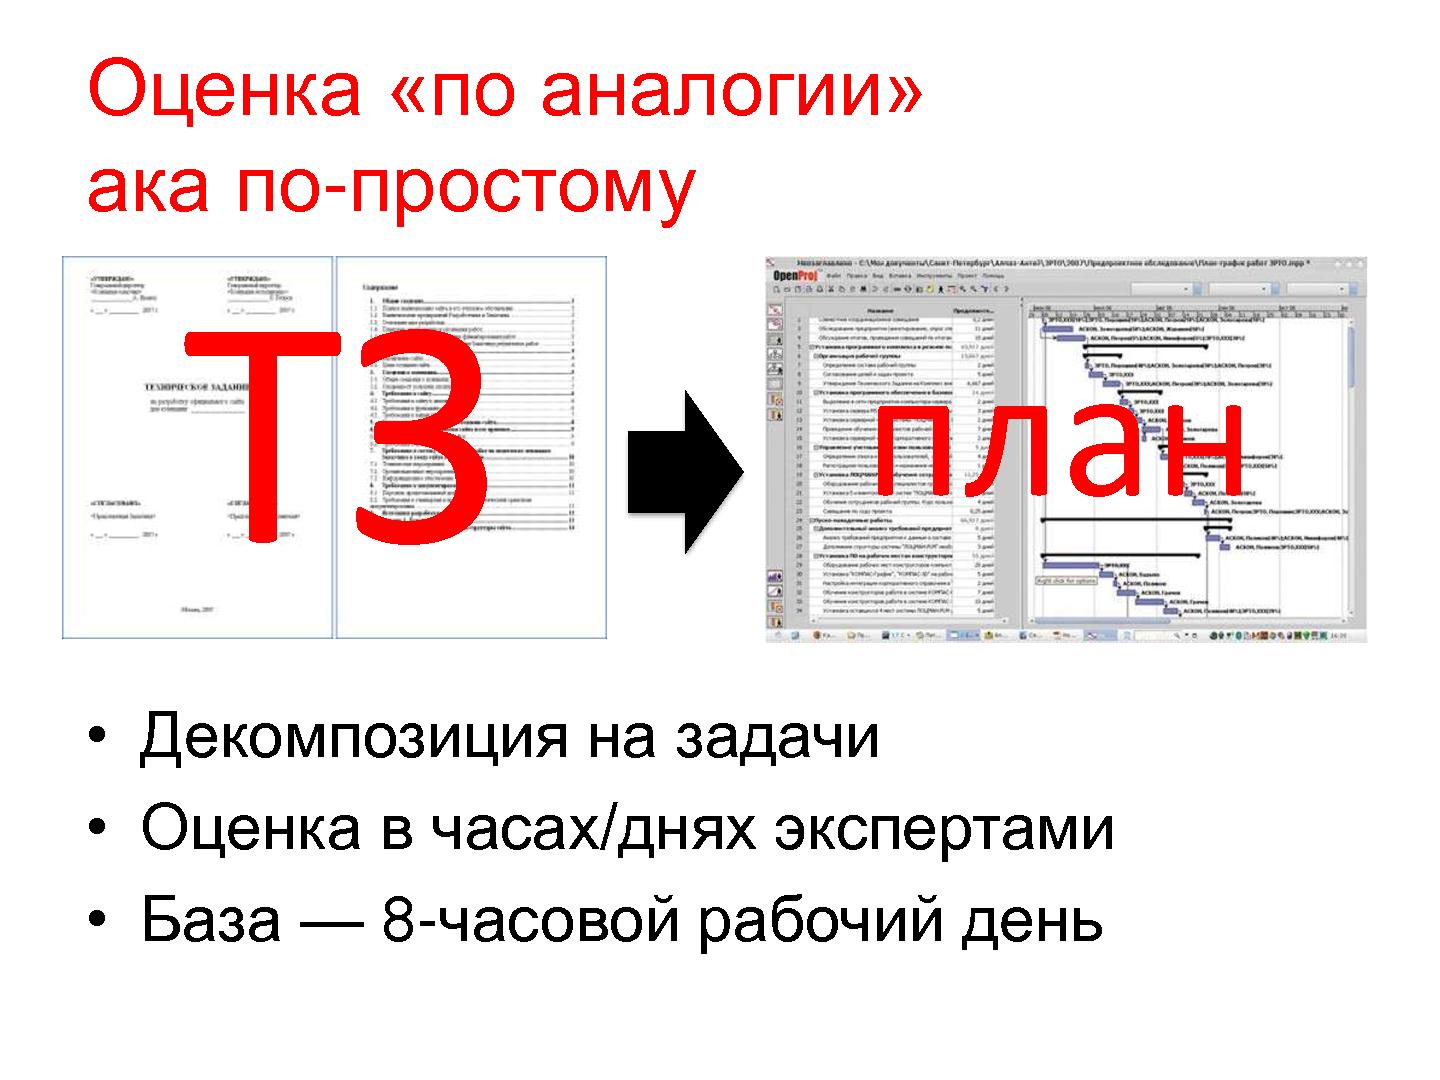 Файл:NoEstimates — Безоценочная разработка (Асхат Уразбаев, AgileDays-2014).pdf